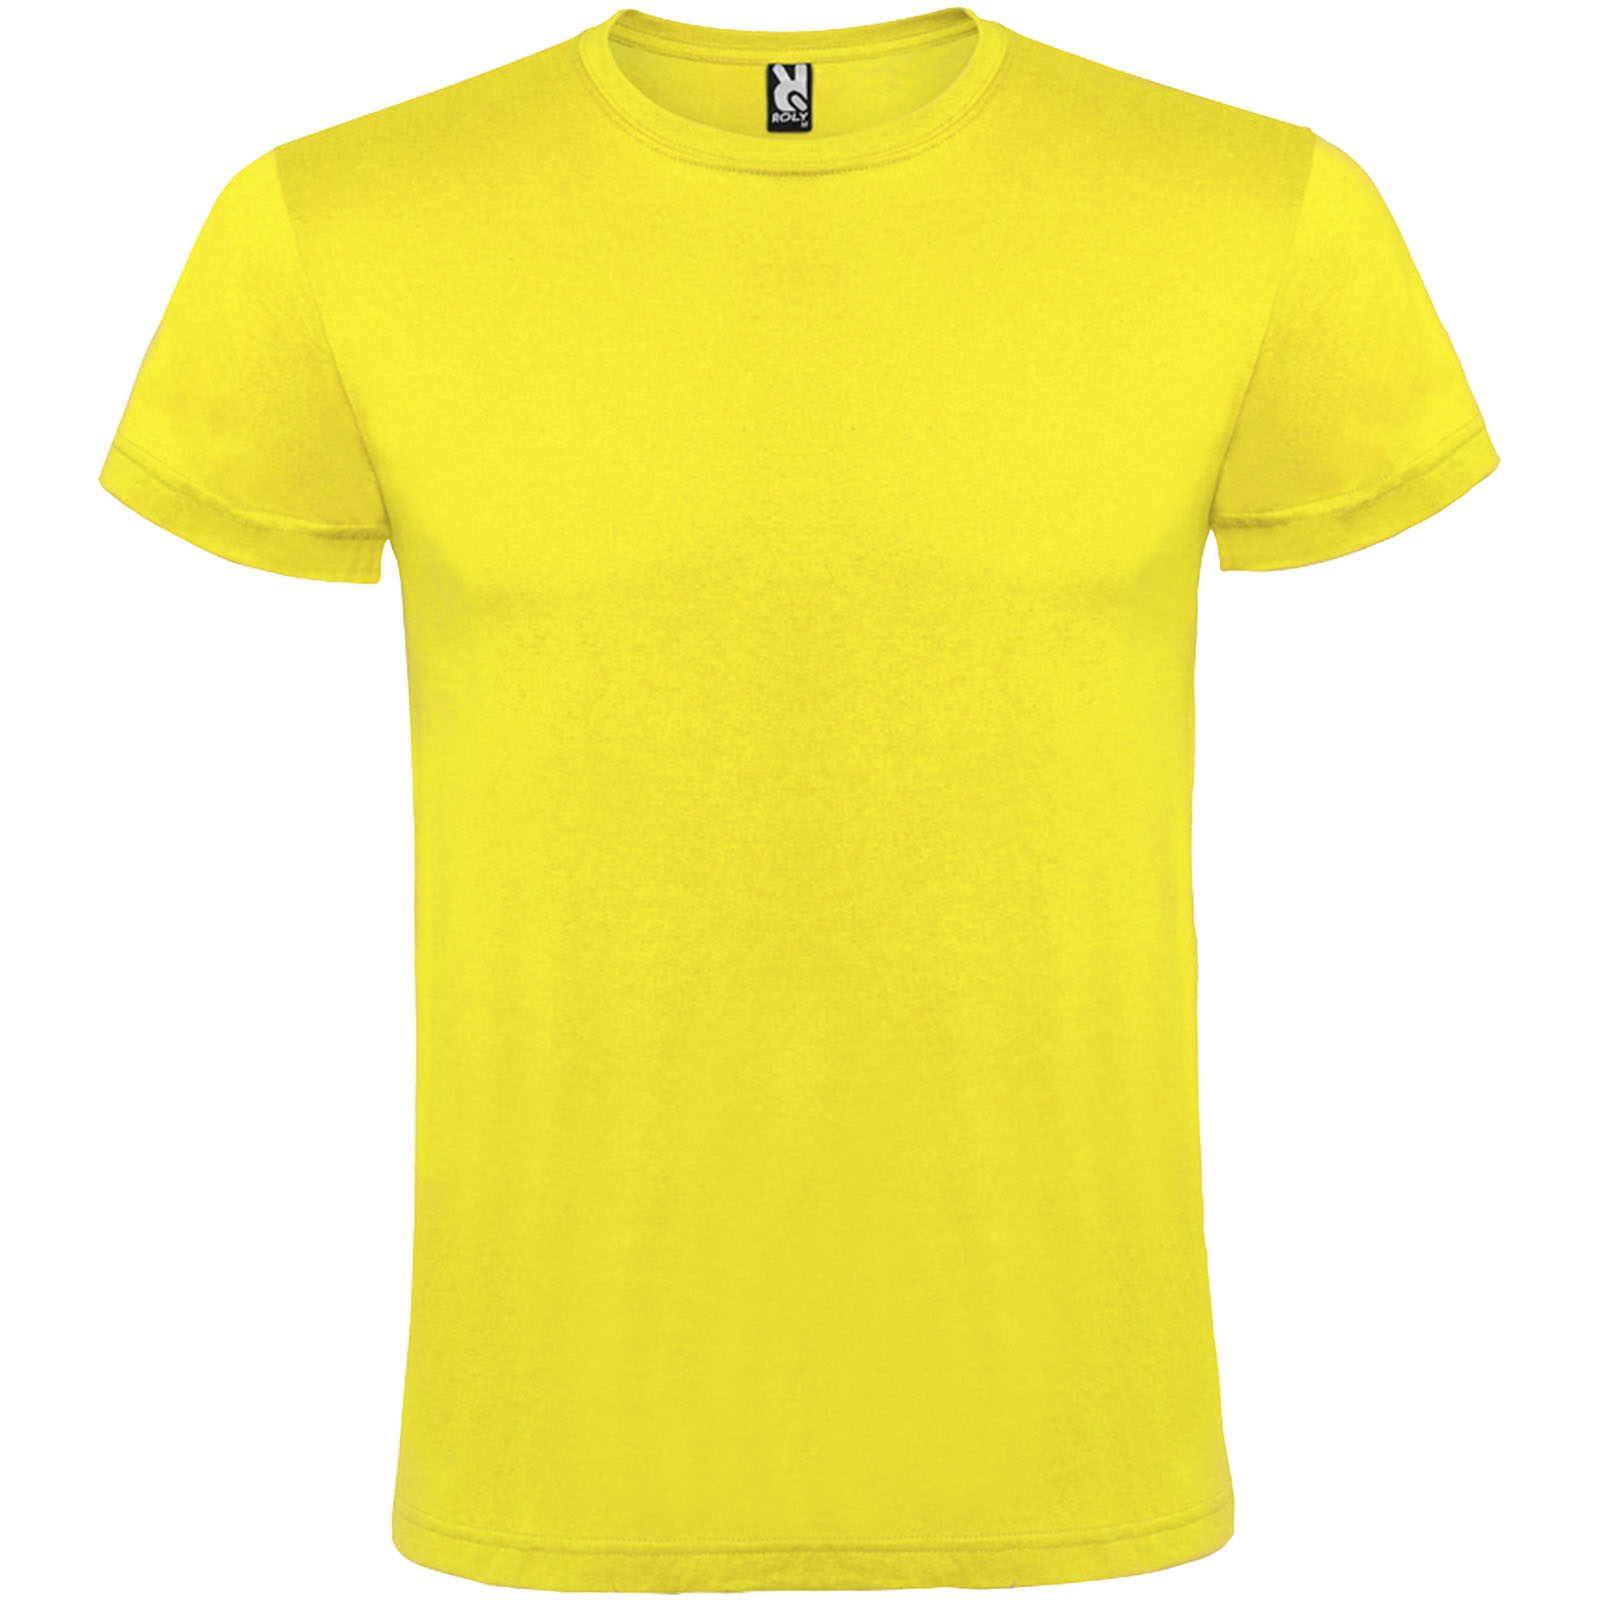 Advertising T-shirts - Atomic short sleeve unisex t-shirt - 0